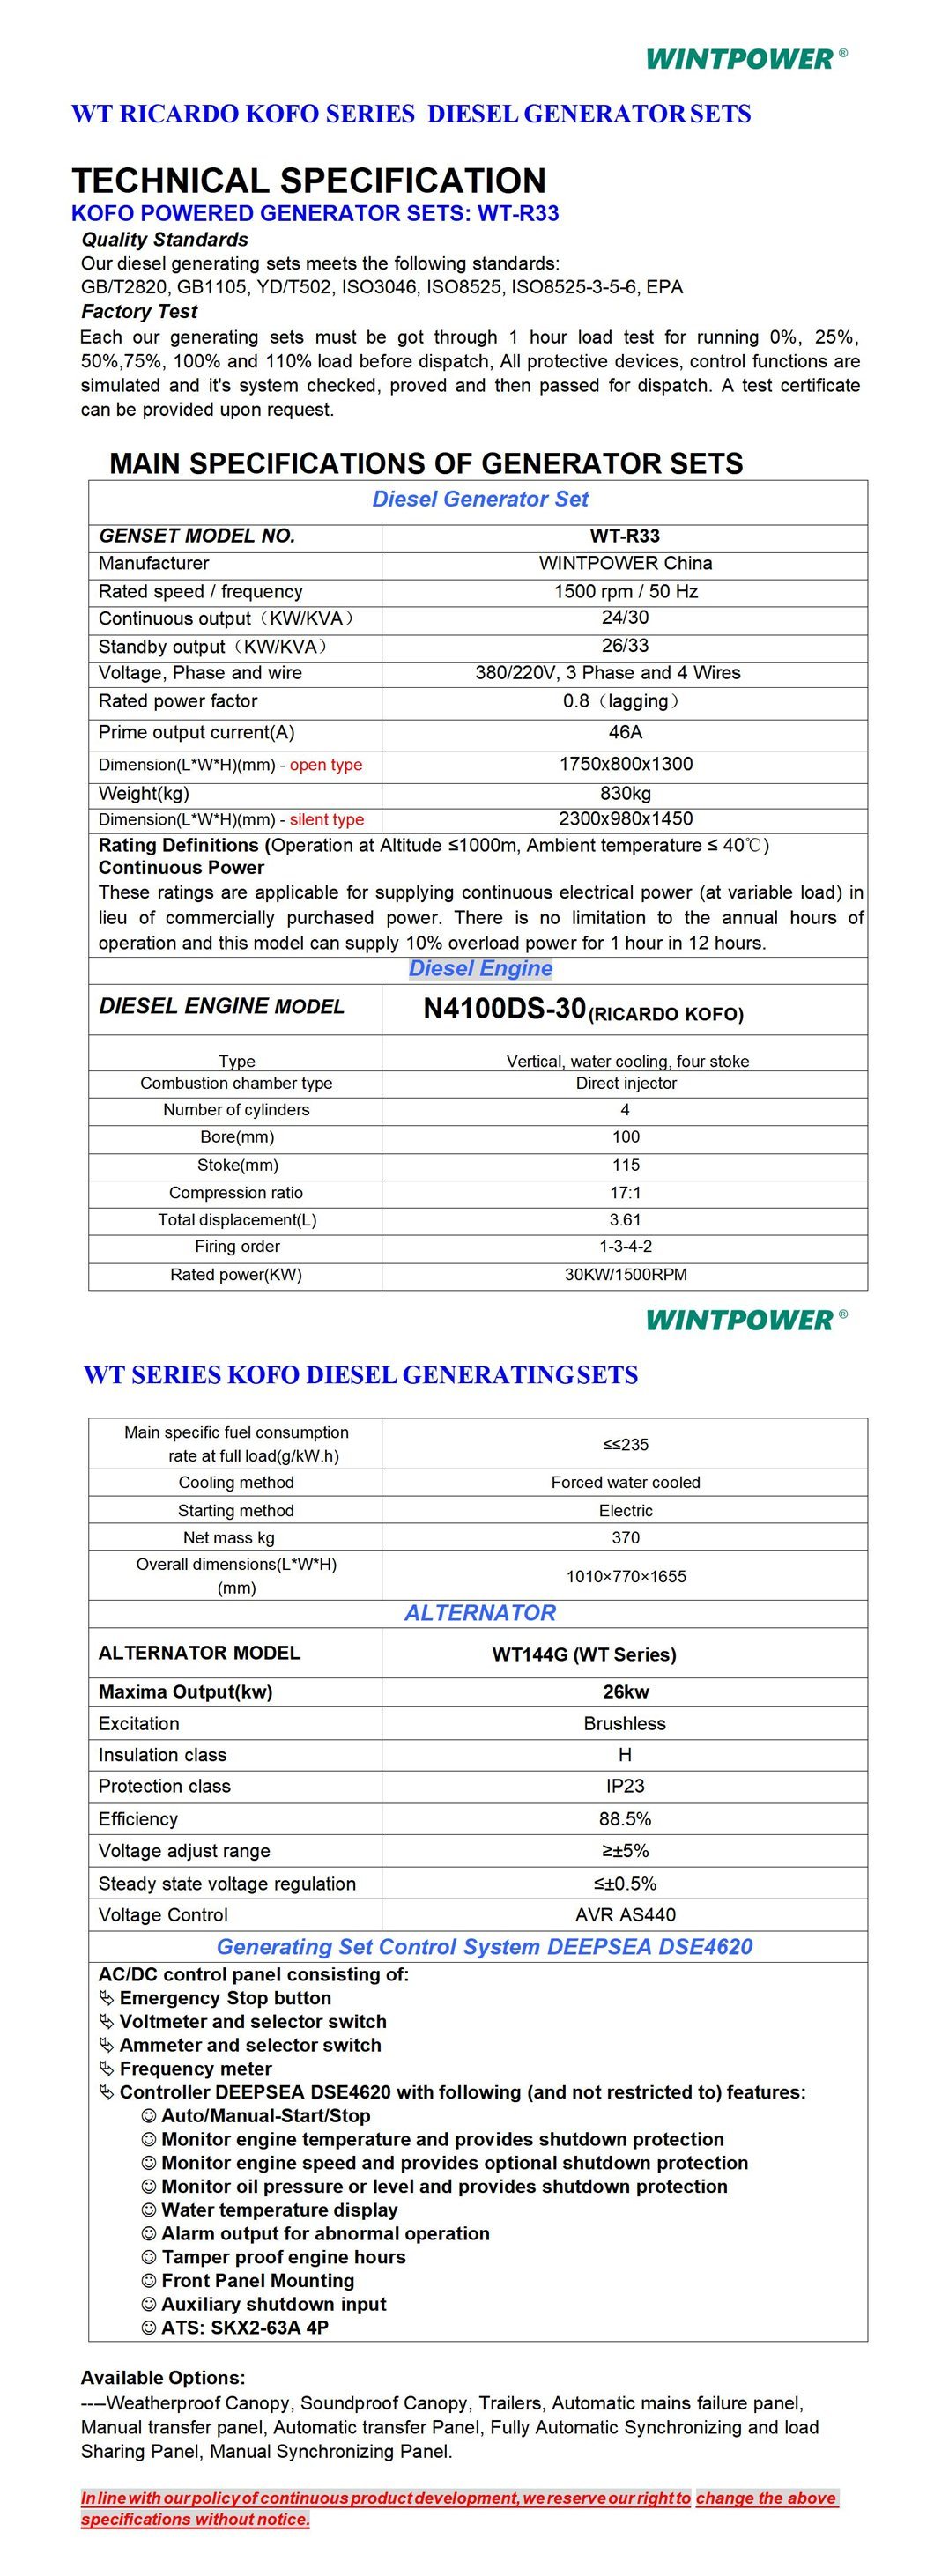 Weichai Kofo Ricardo Diesel Power Generator Set Dg Genset 100kVA 4rt55-88d R6105zlds 110kVA 4rt55-110d 120kVA R6105azlds 138kVA R6105bzlds 165kVA R61206zlds